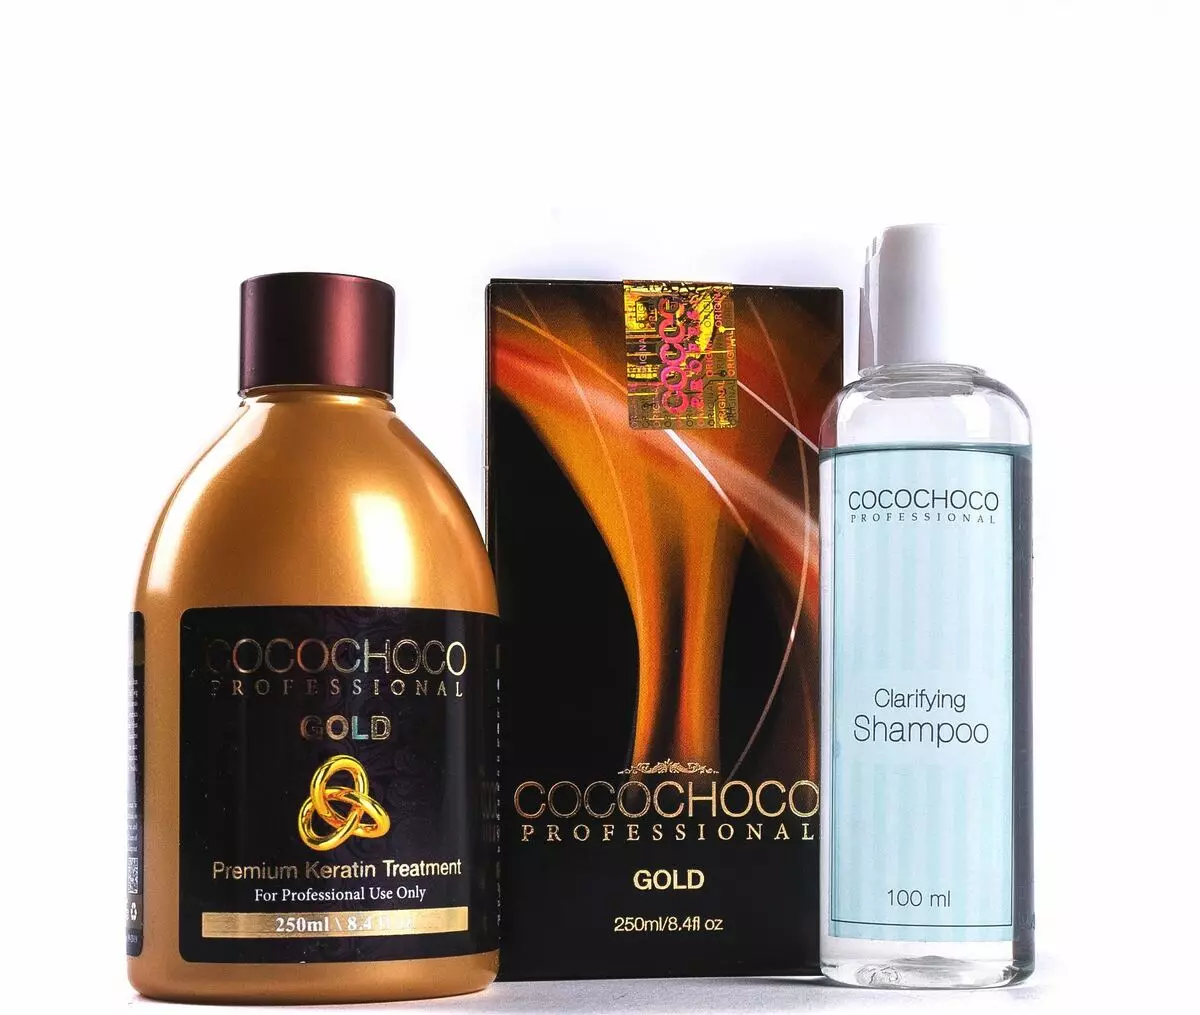 COCOCHOCO قرنين: خصائص البرازيلي الشعر استقامة وتعليمات استخدامها، ويتميز استخدام الشامبو تتركز عالي 16615_4